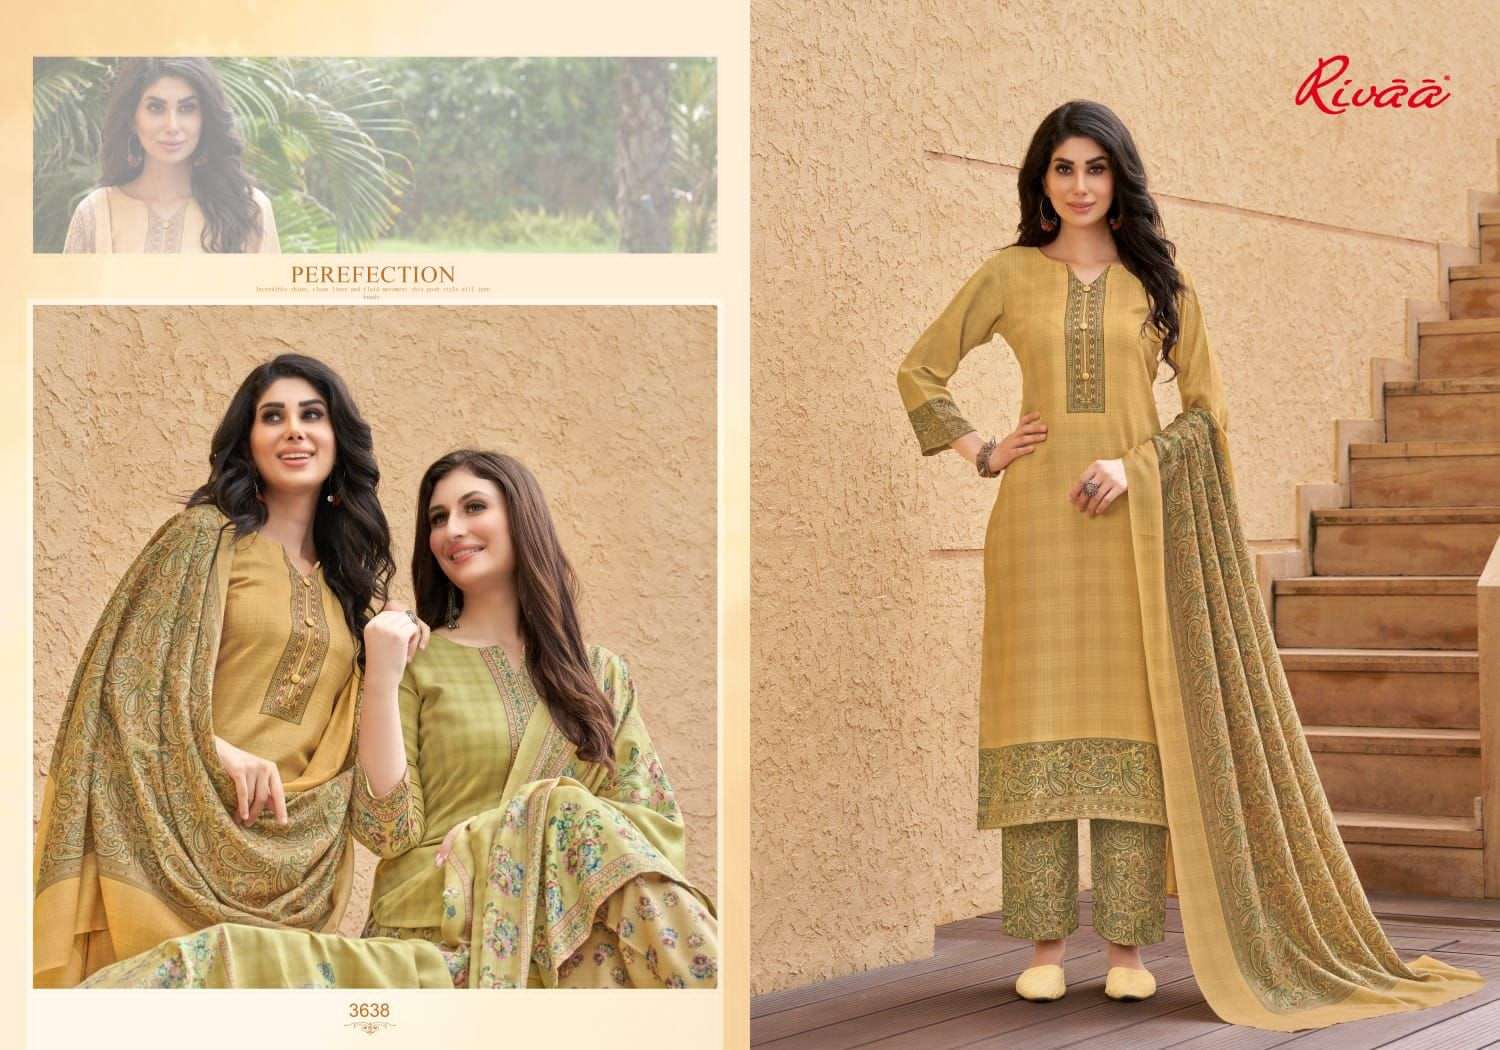 rivaa exports nihaar pashmina kani digital printed dress material wholesale price surat